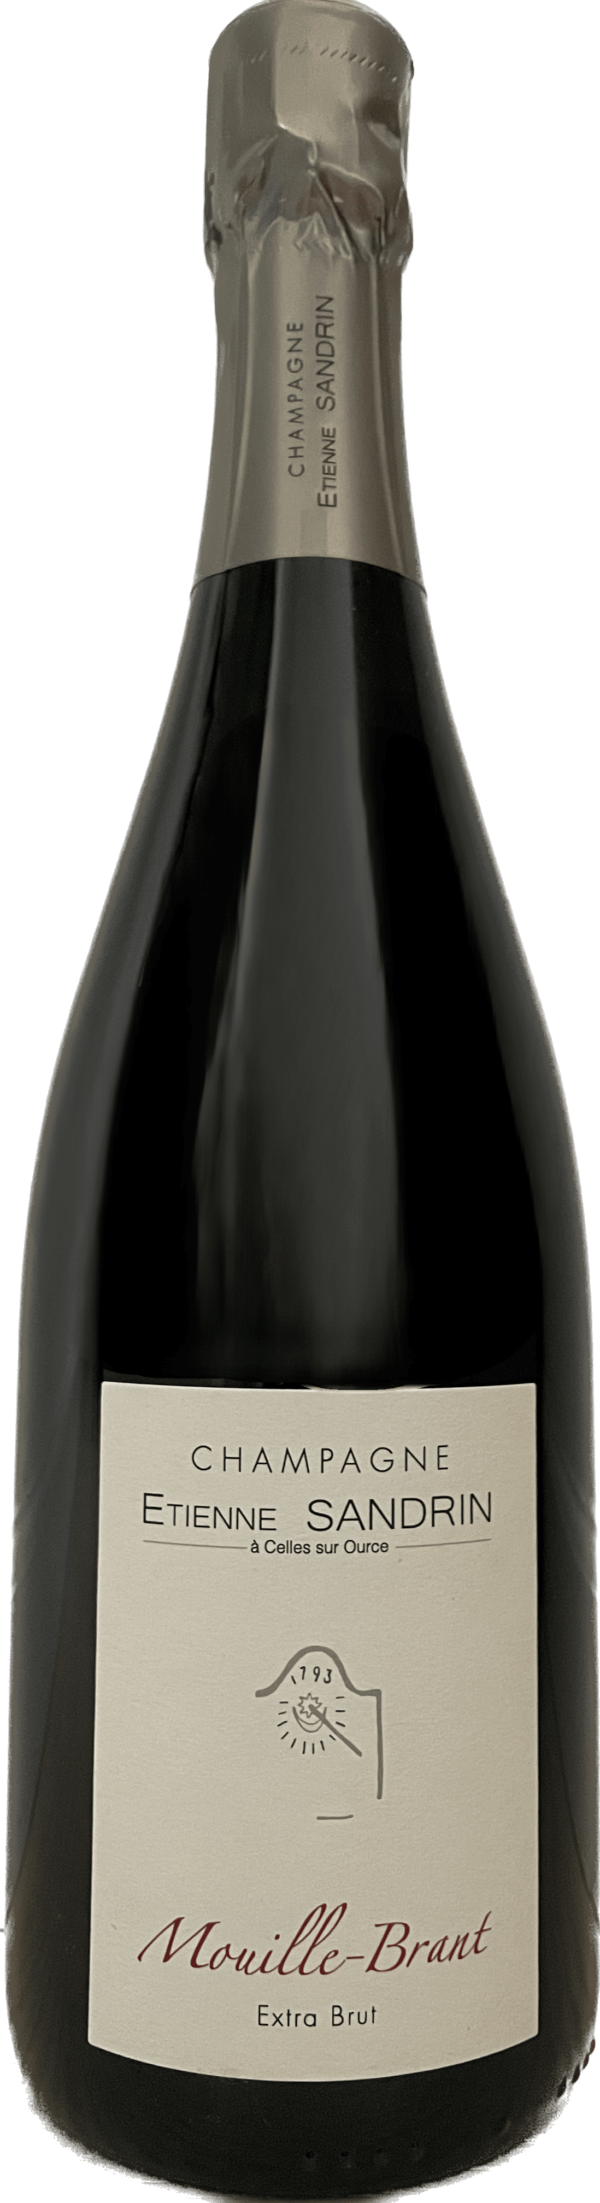 Champagne Etienne Sandrin "Mouille-Brant" 2018